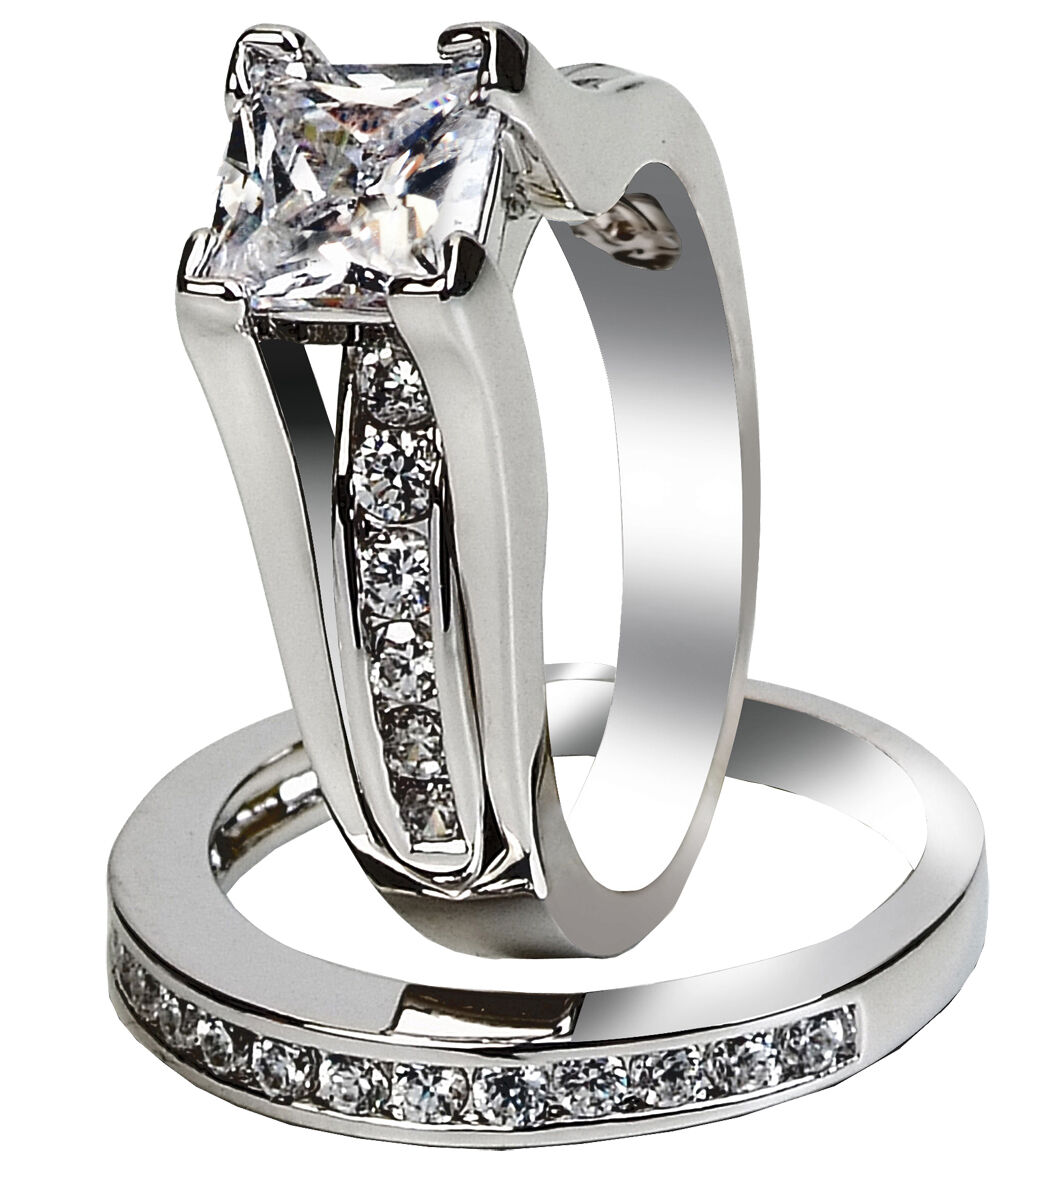 Classy Women Stainless Steel Princess Cut Wedding Engagement Ring Set Size 5-11